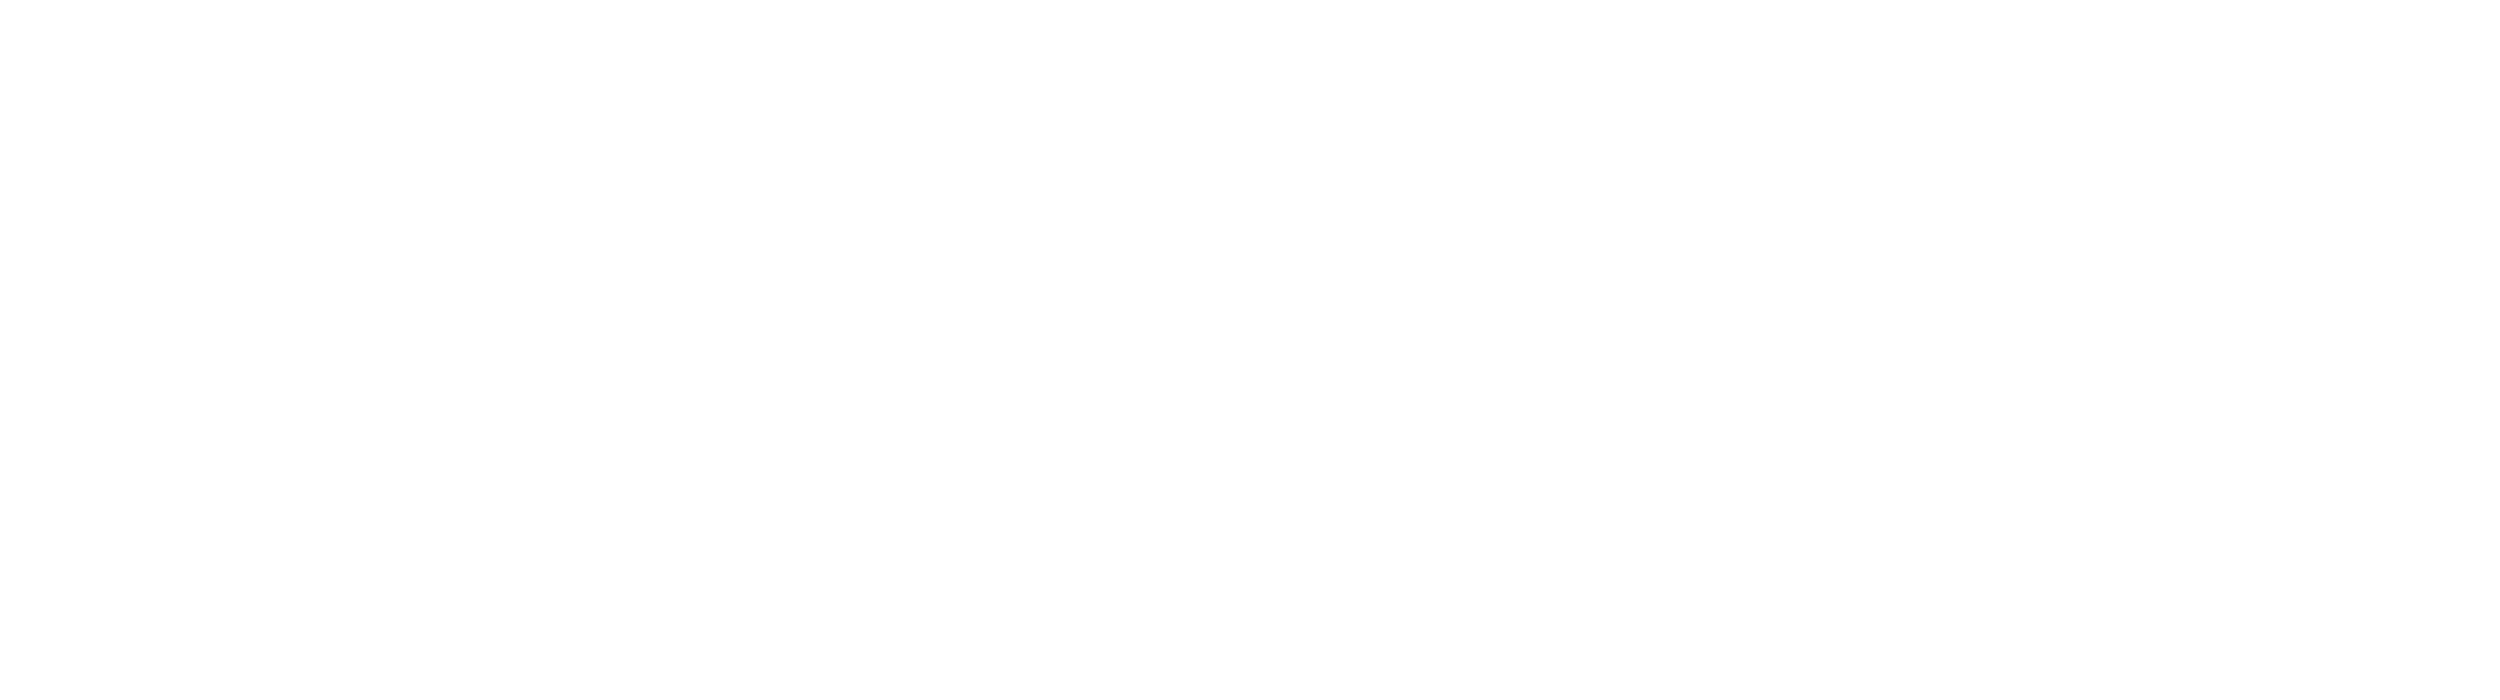 AmWest company logo white